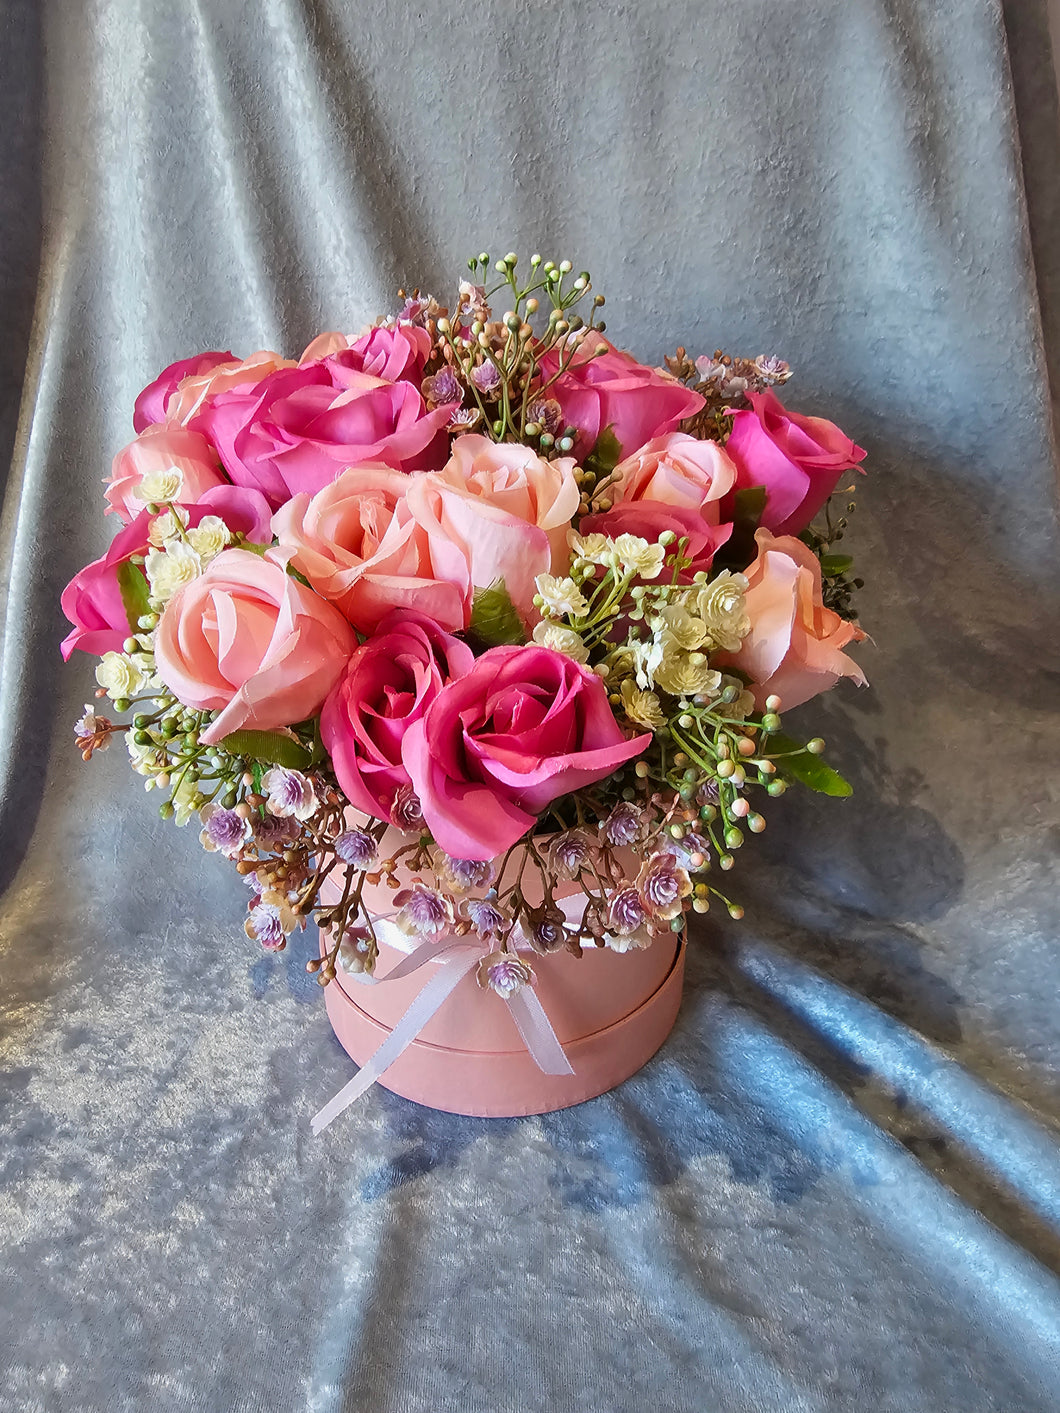 Artificial Pink Rose Floral Display in Pink Hatbox